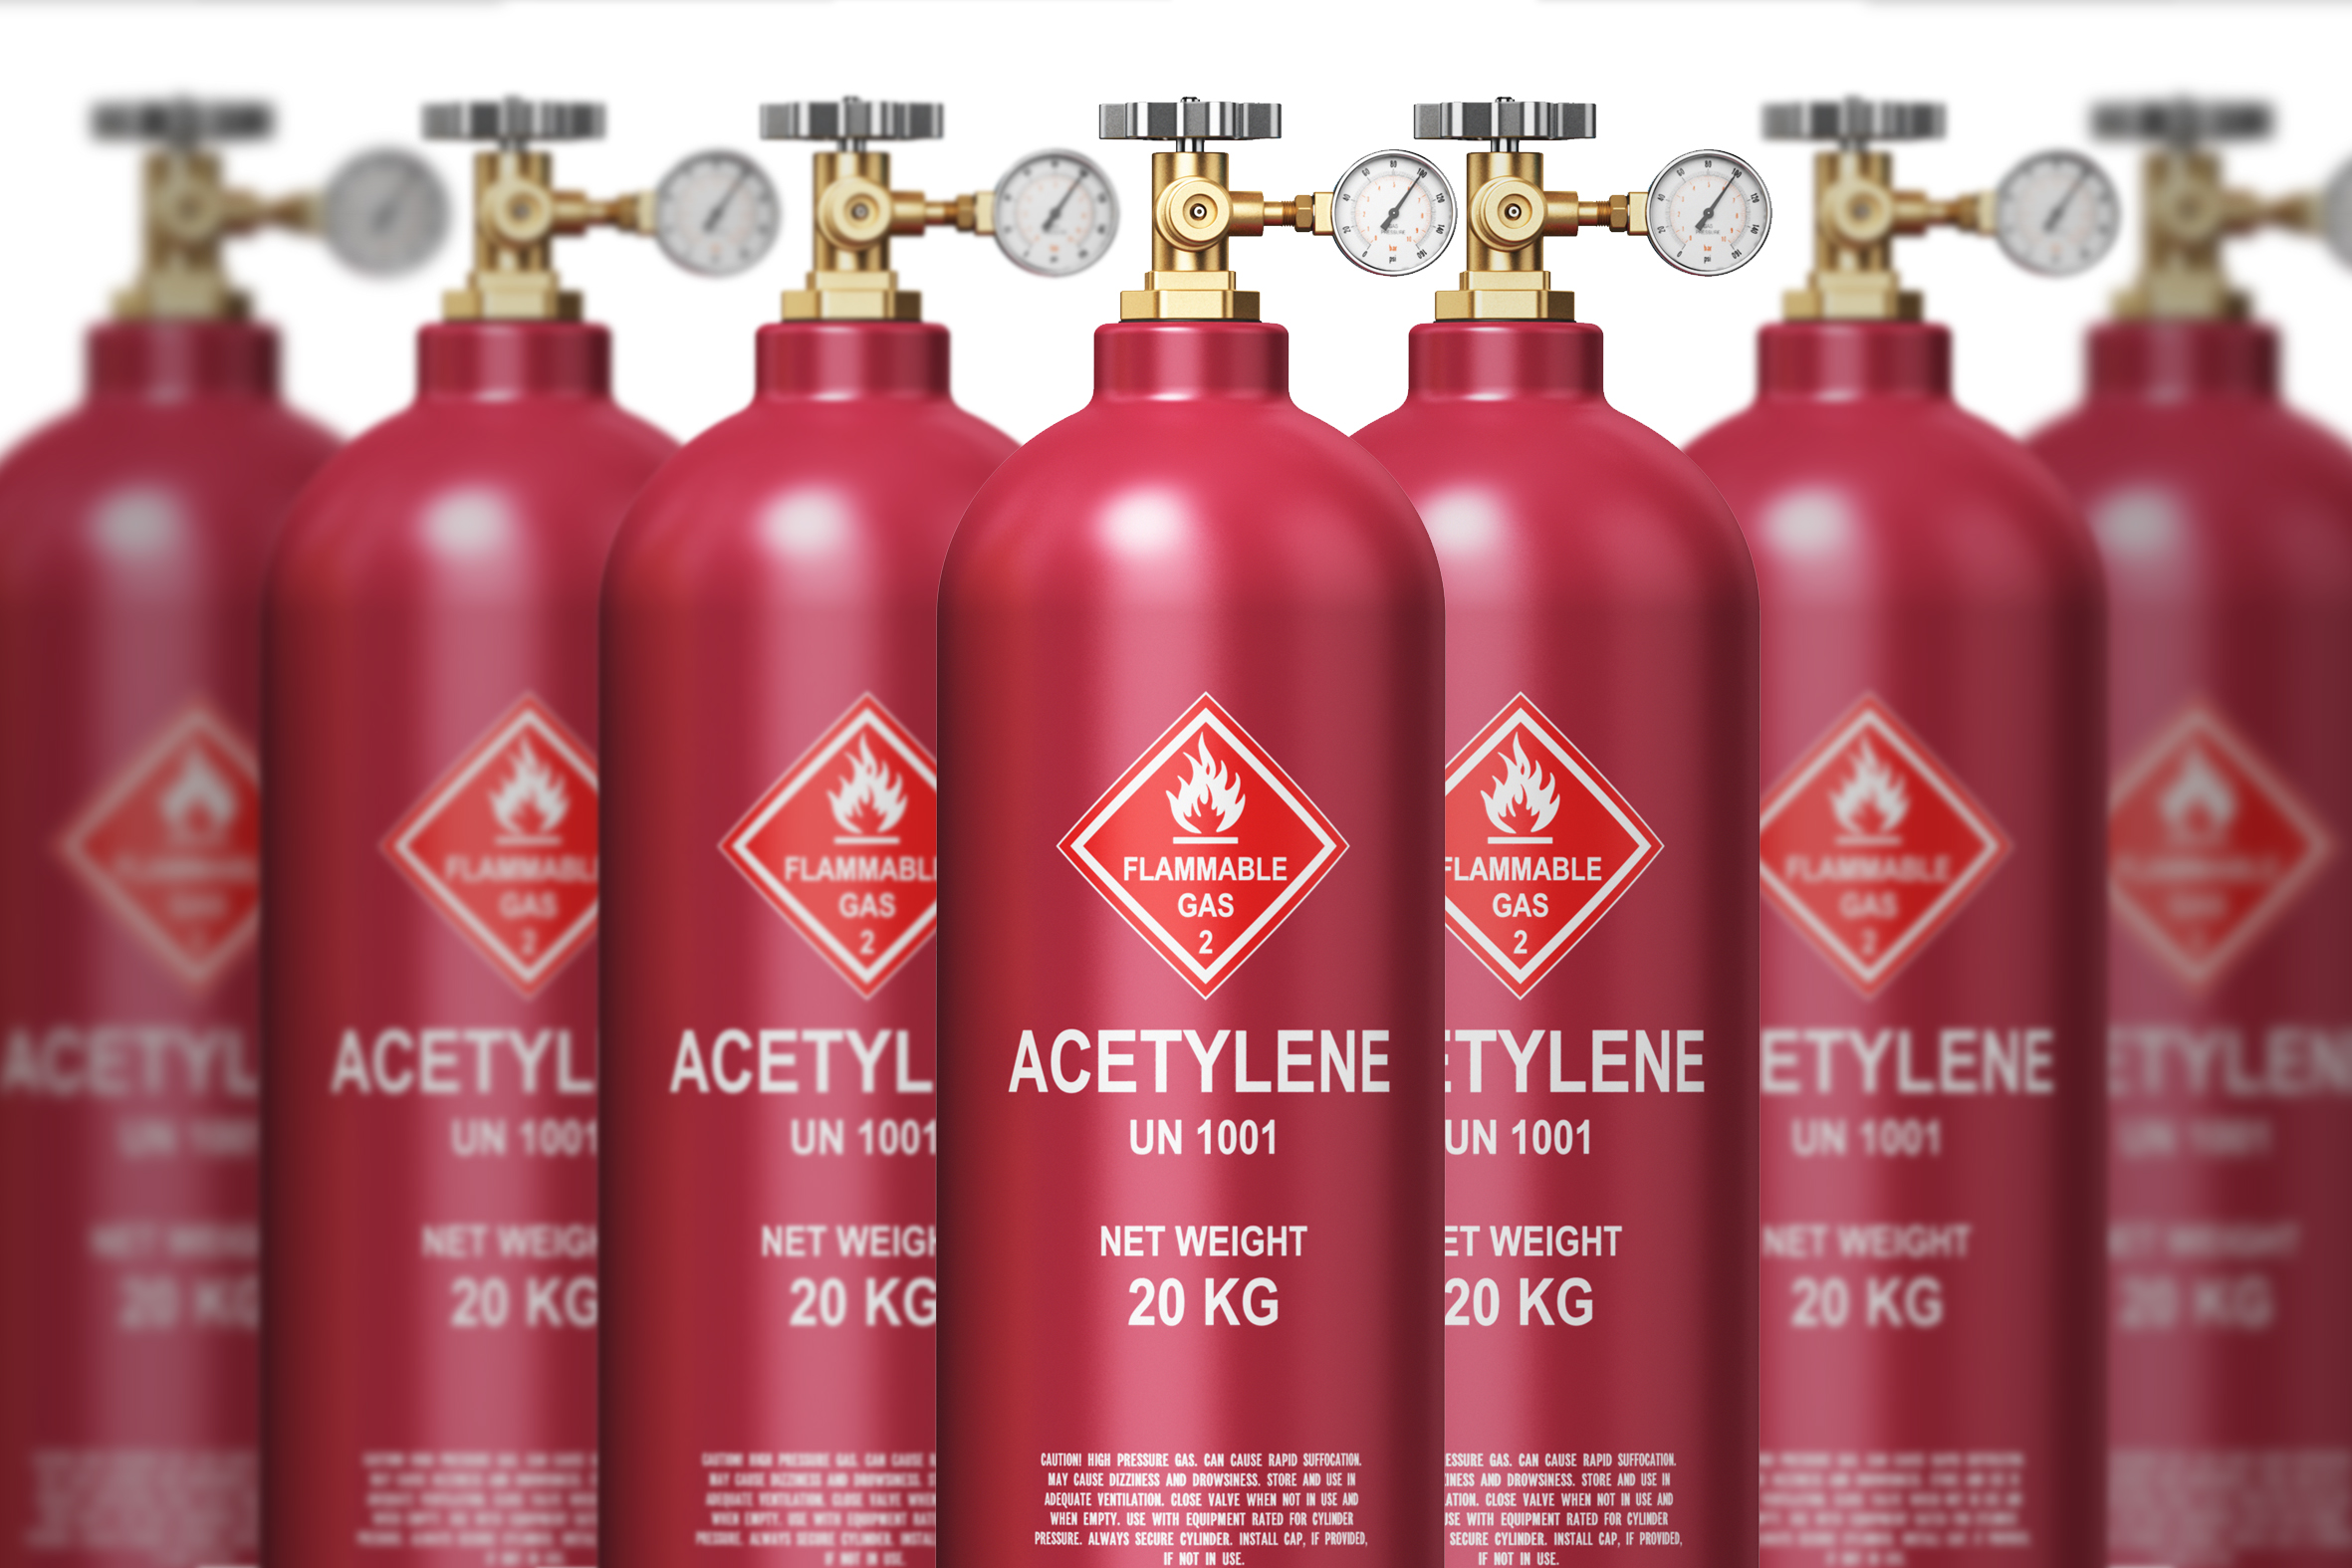 Buy Acetylene Gas Seychelles